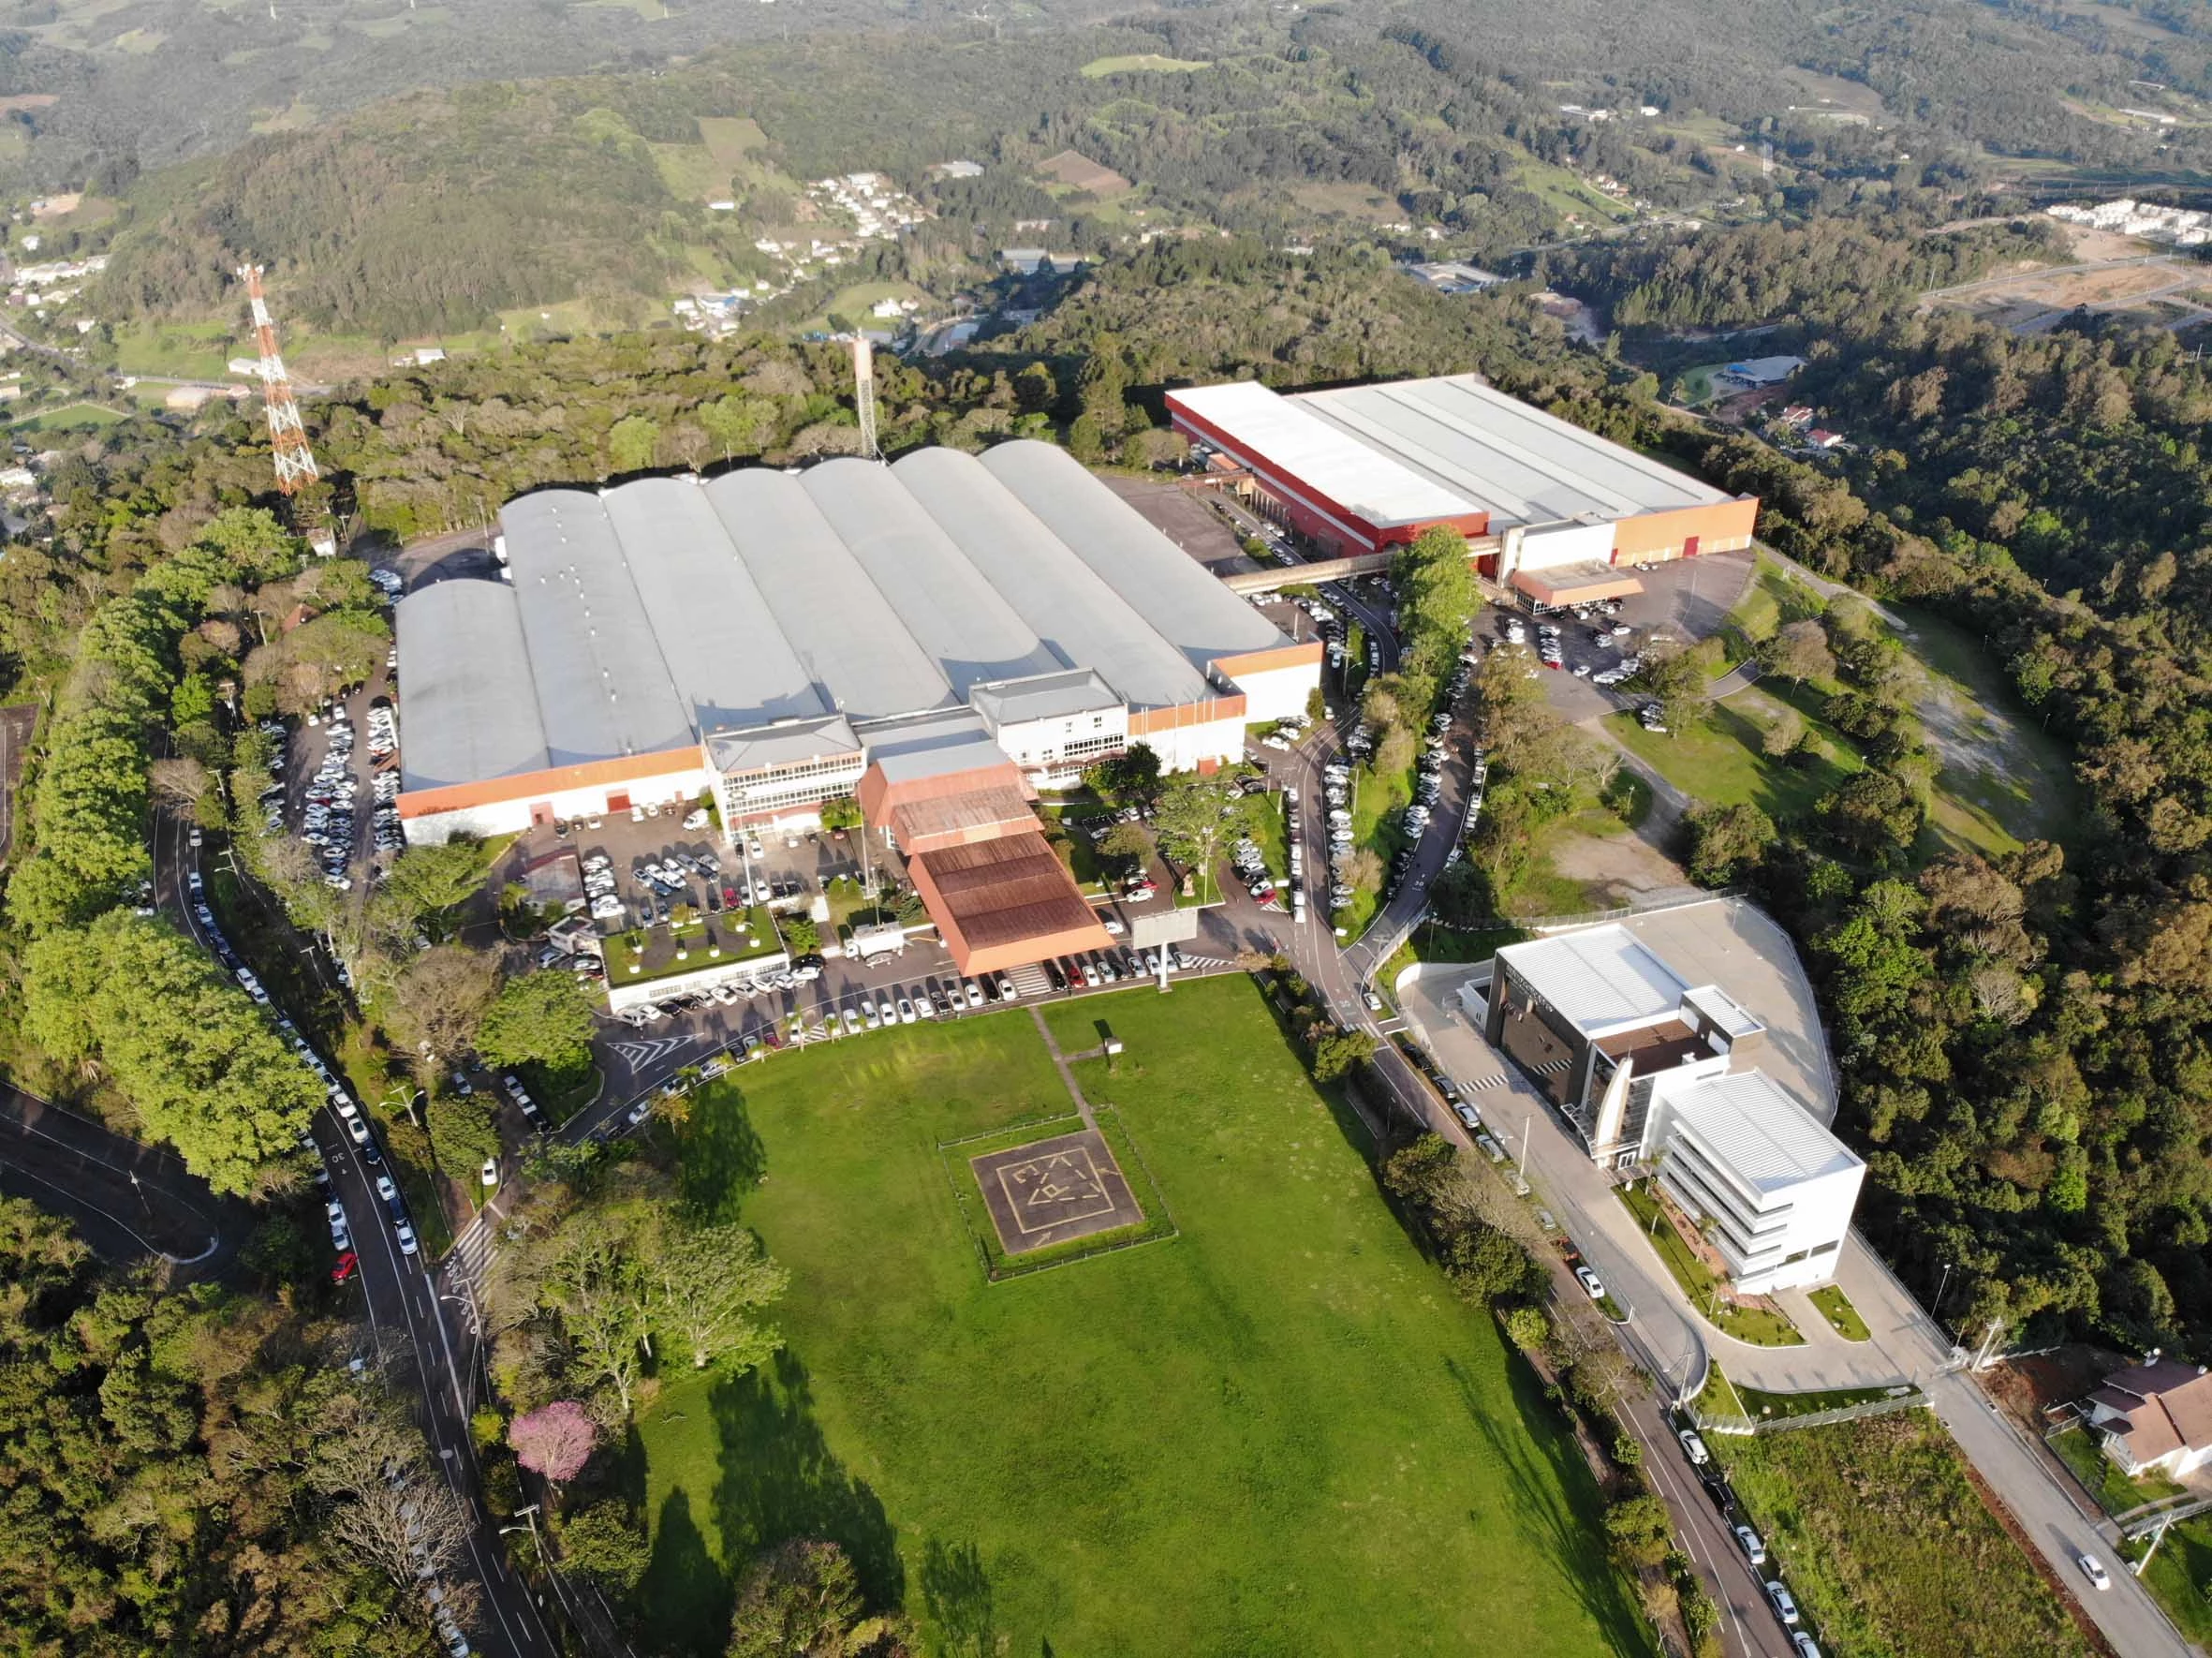 Aerial image of Uvibra location